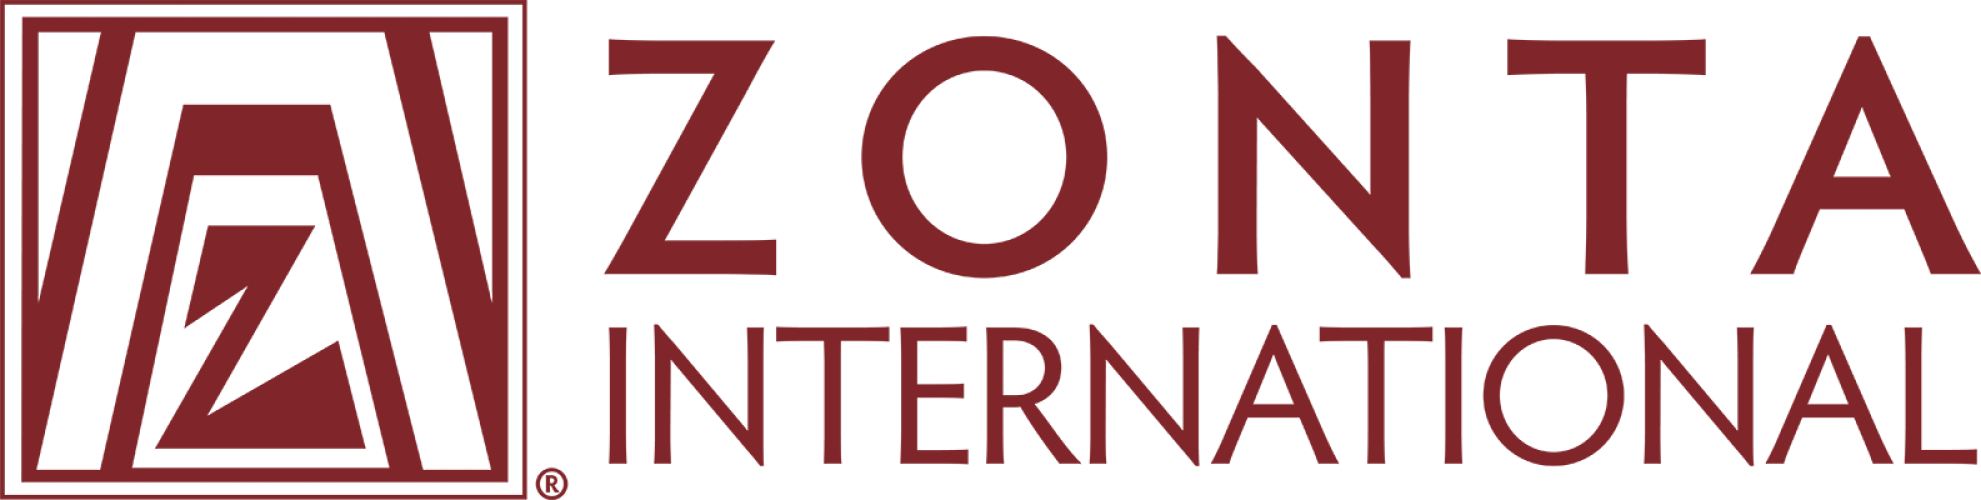 ZONTA International